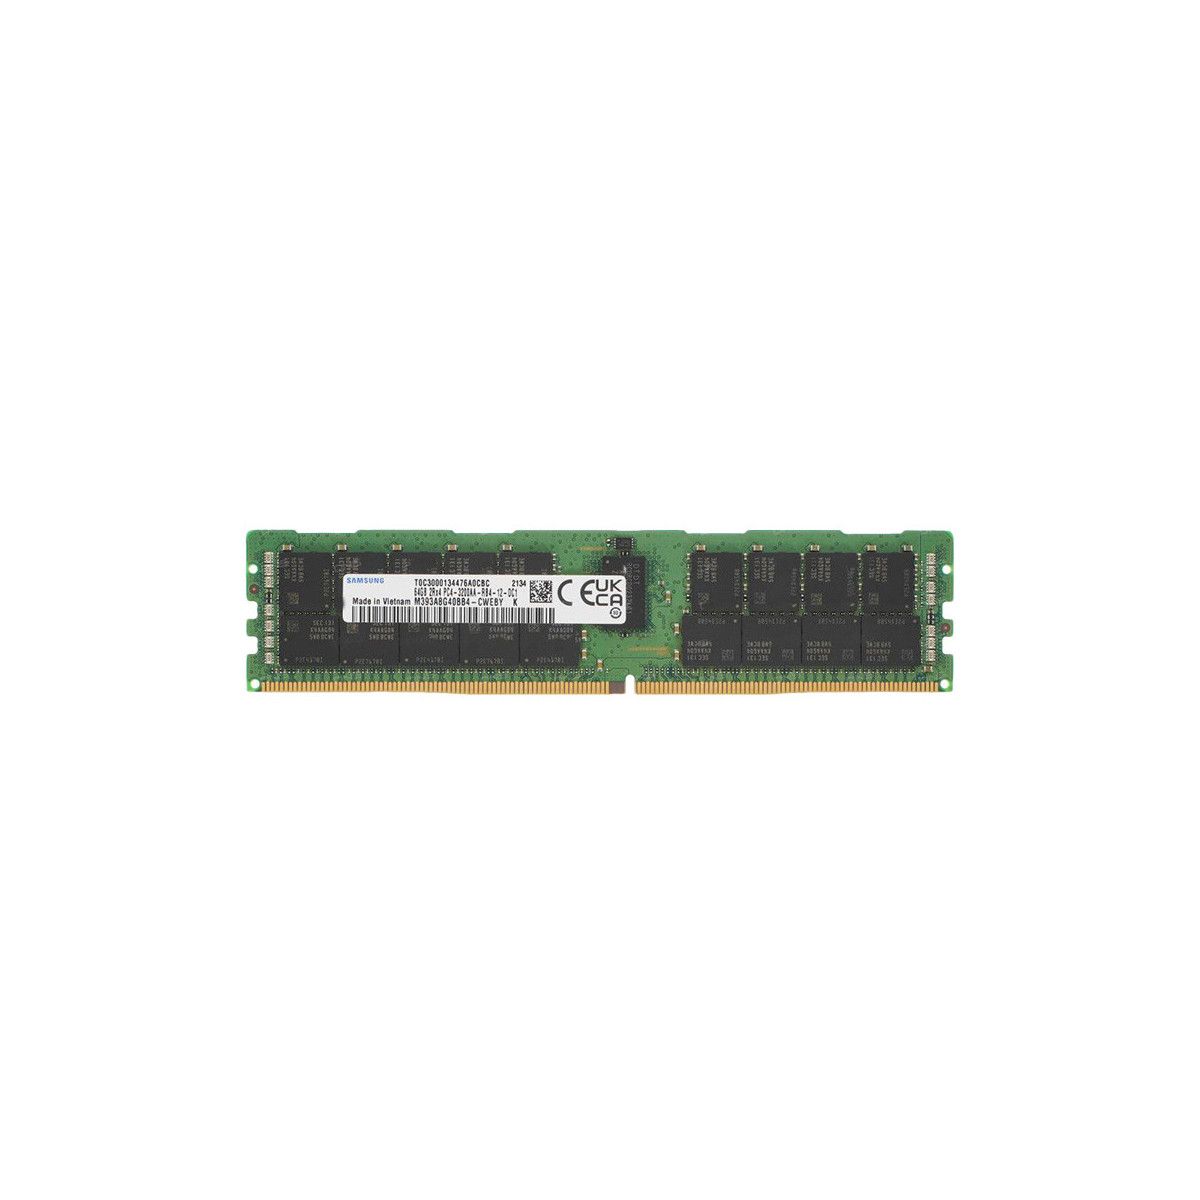 AA810828-MS - Memstar 1x 64GB DDR4-3200 RDIMM PC4-25600R - Mem-Star Compatible OEM Memory 1 - Memstar 